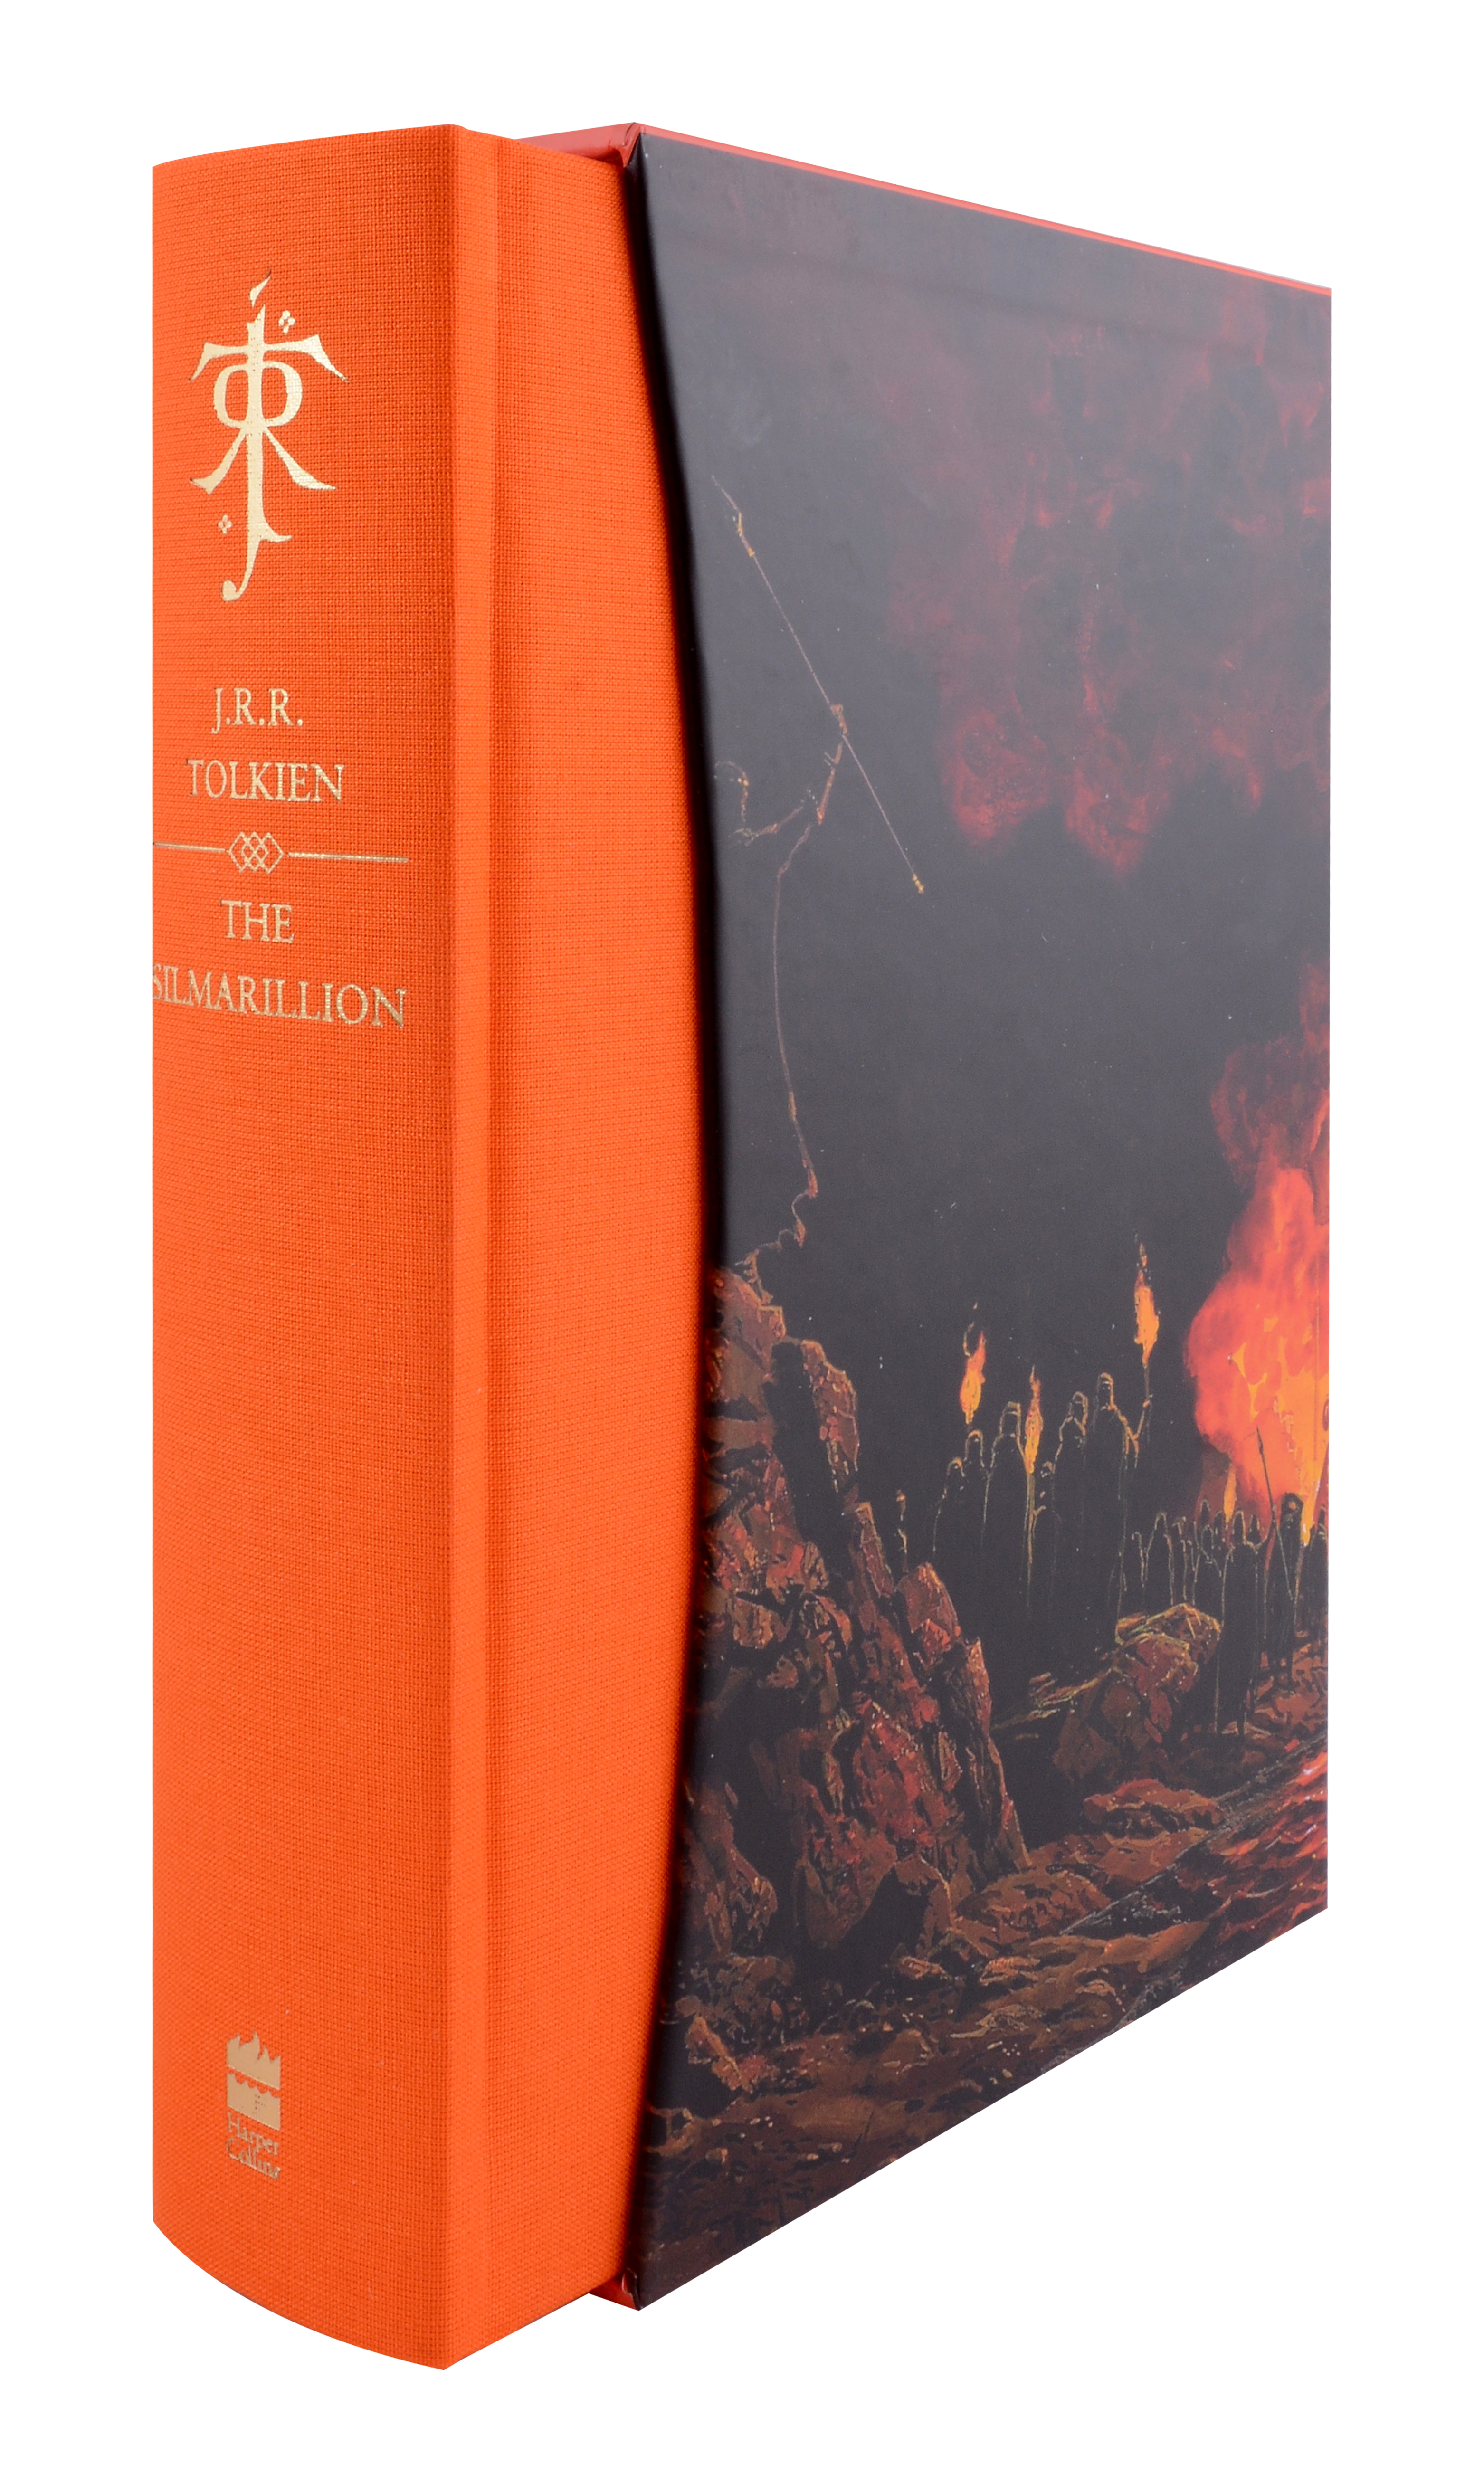 Толкин Джон Рональд Руэл Silmarillion illustrated ed box tom petty hypnotic eye 180g limited edition printed in u s a